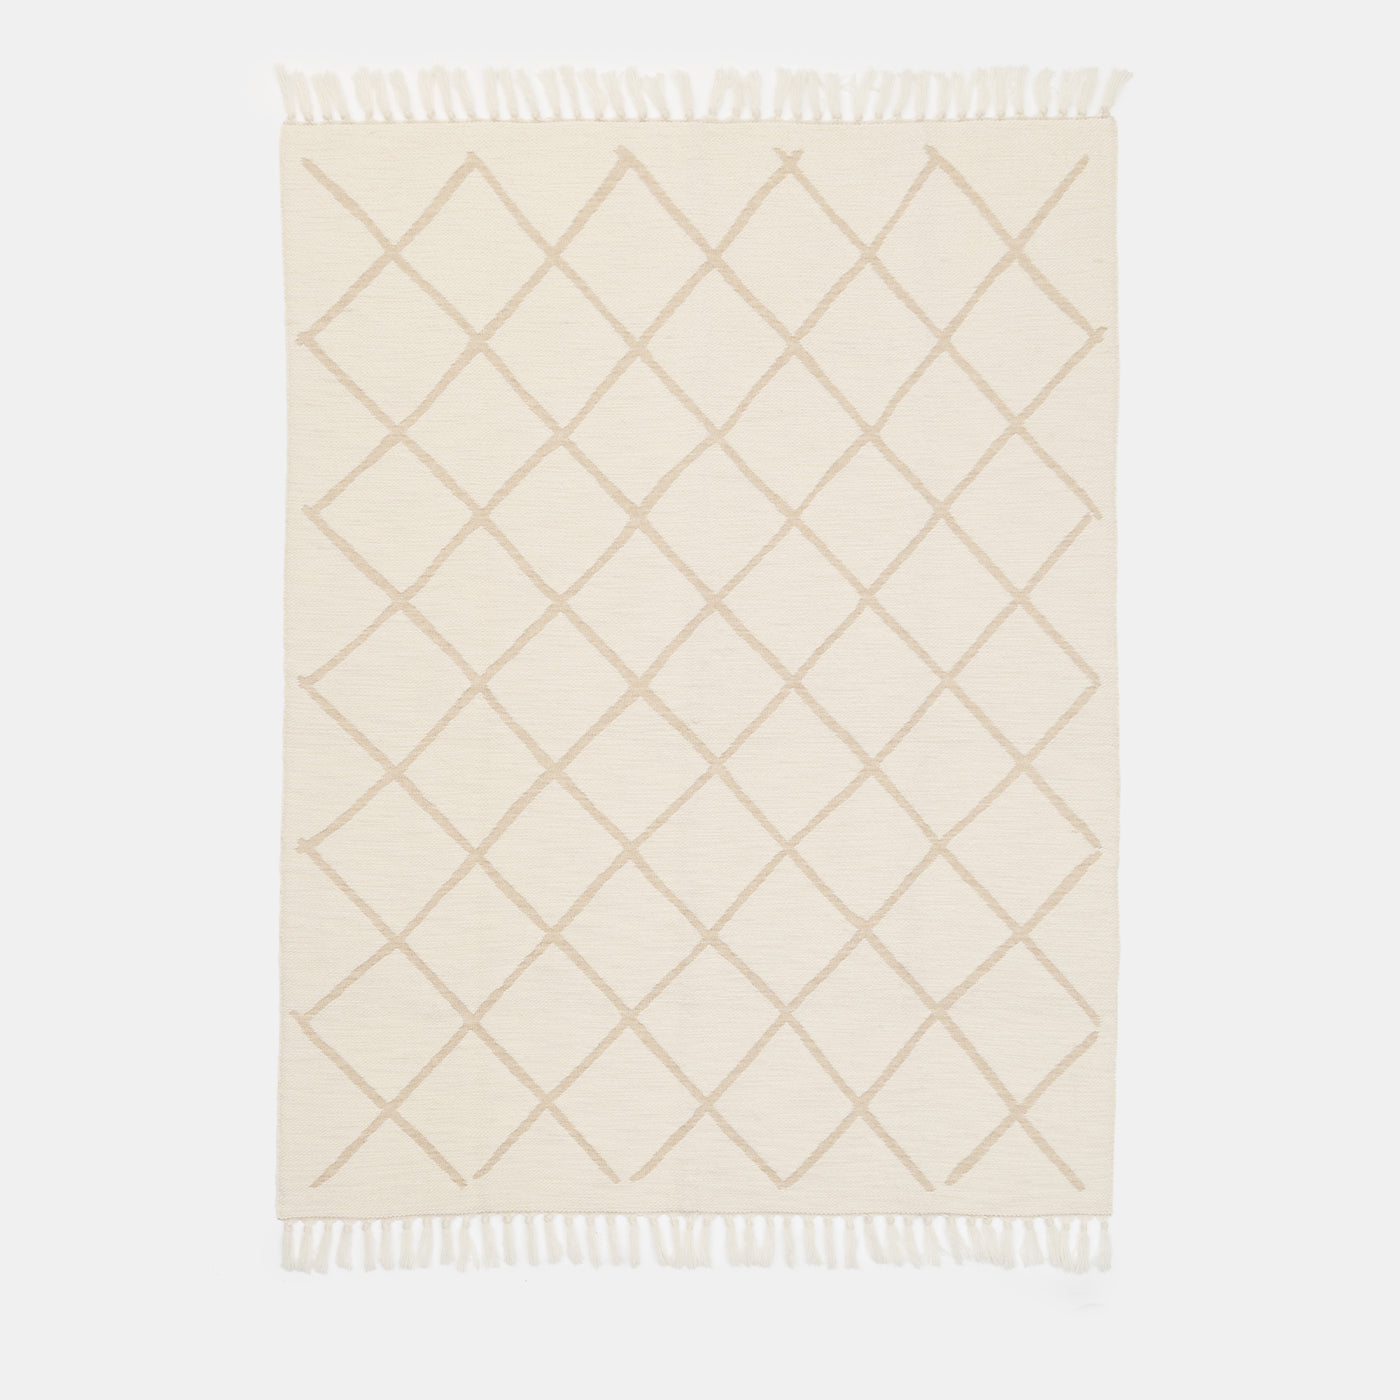 Geometric-Patterned Beige Blanket - Alternative view 1